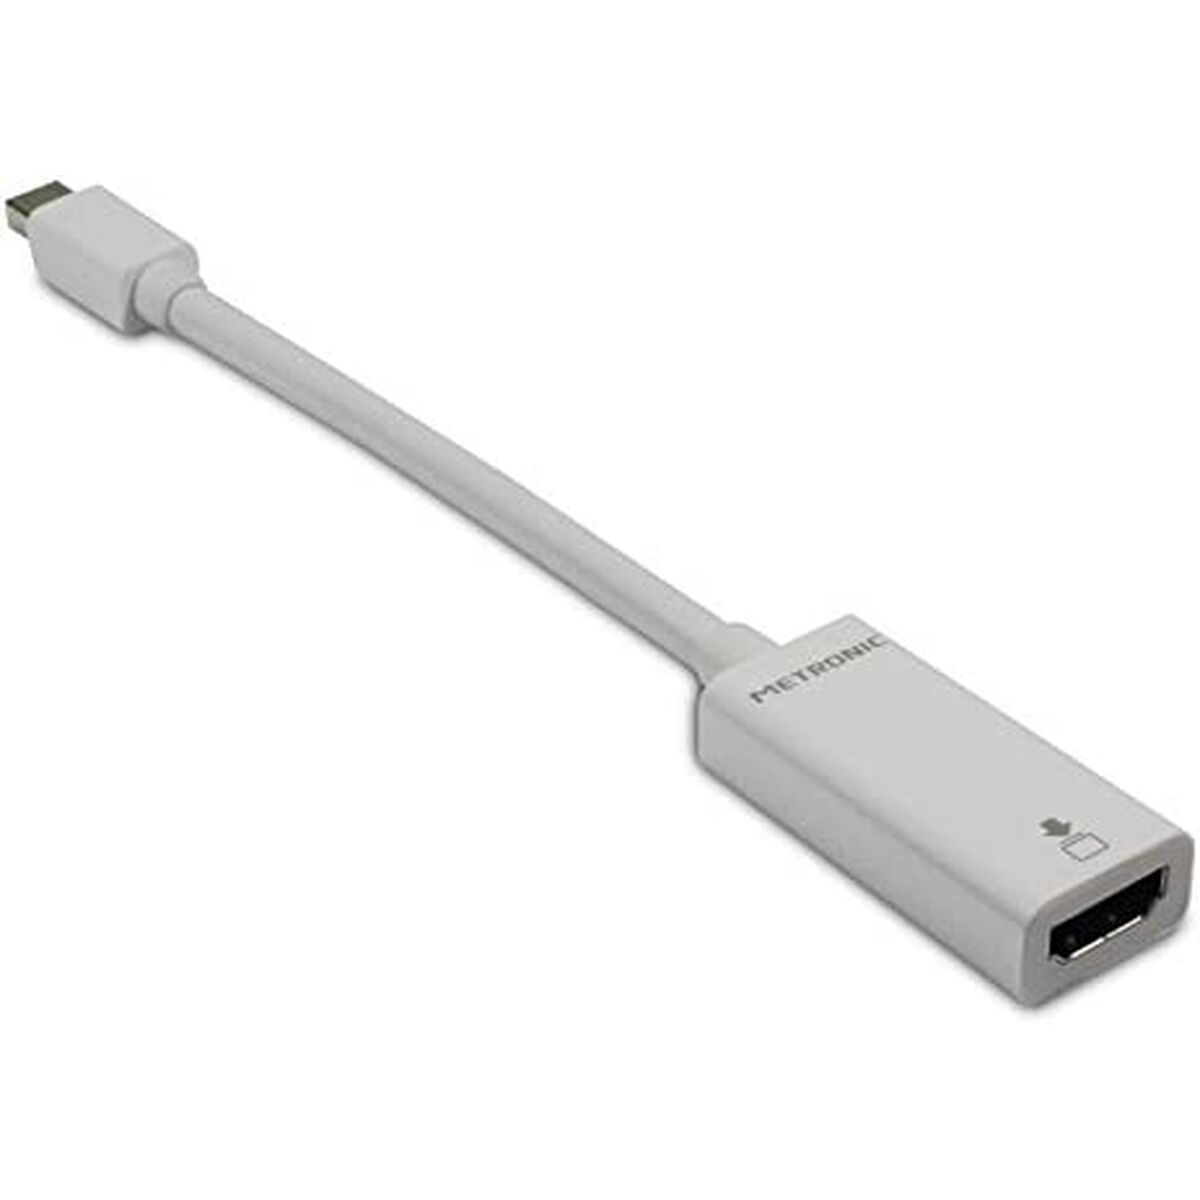 Adaptor USB METRONIC 470308